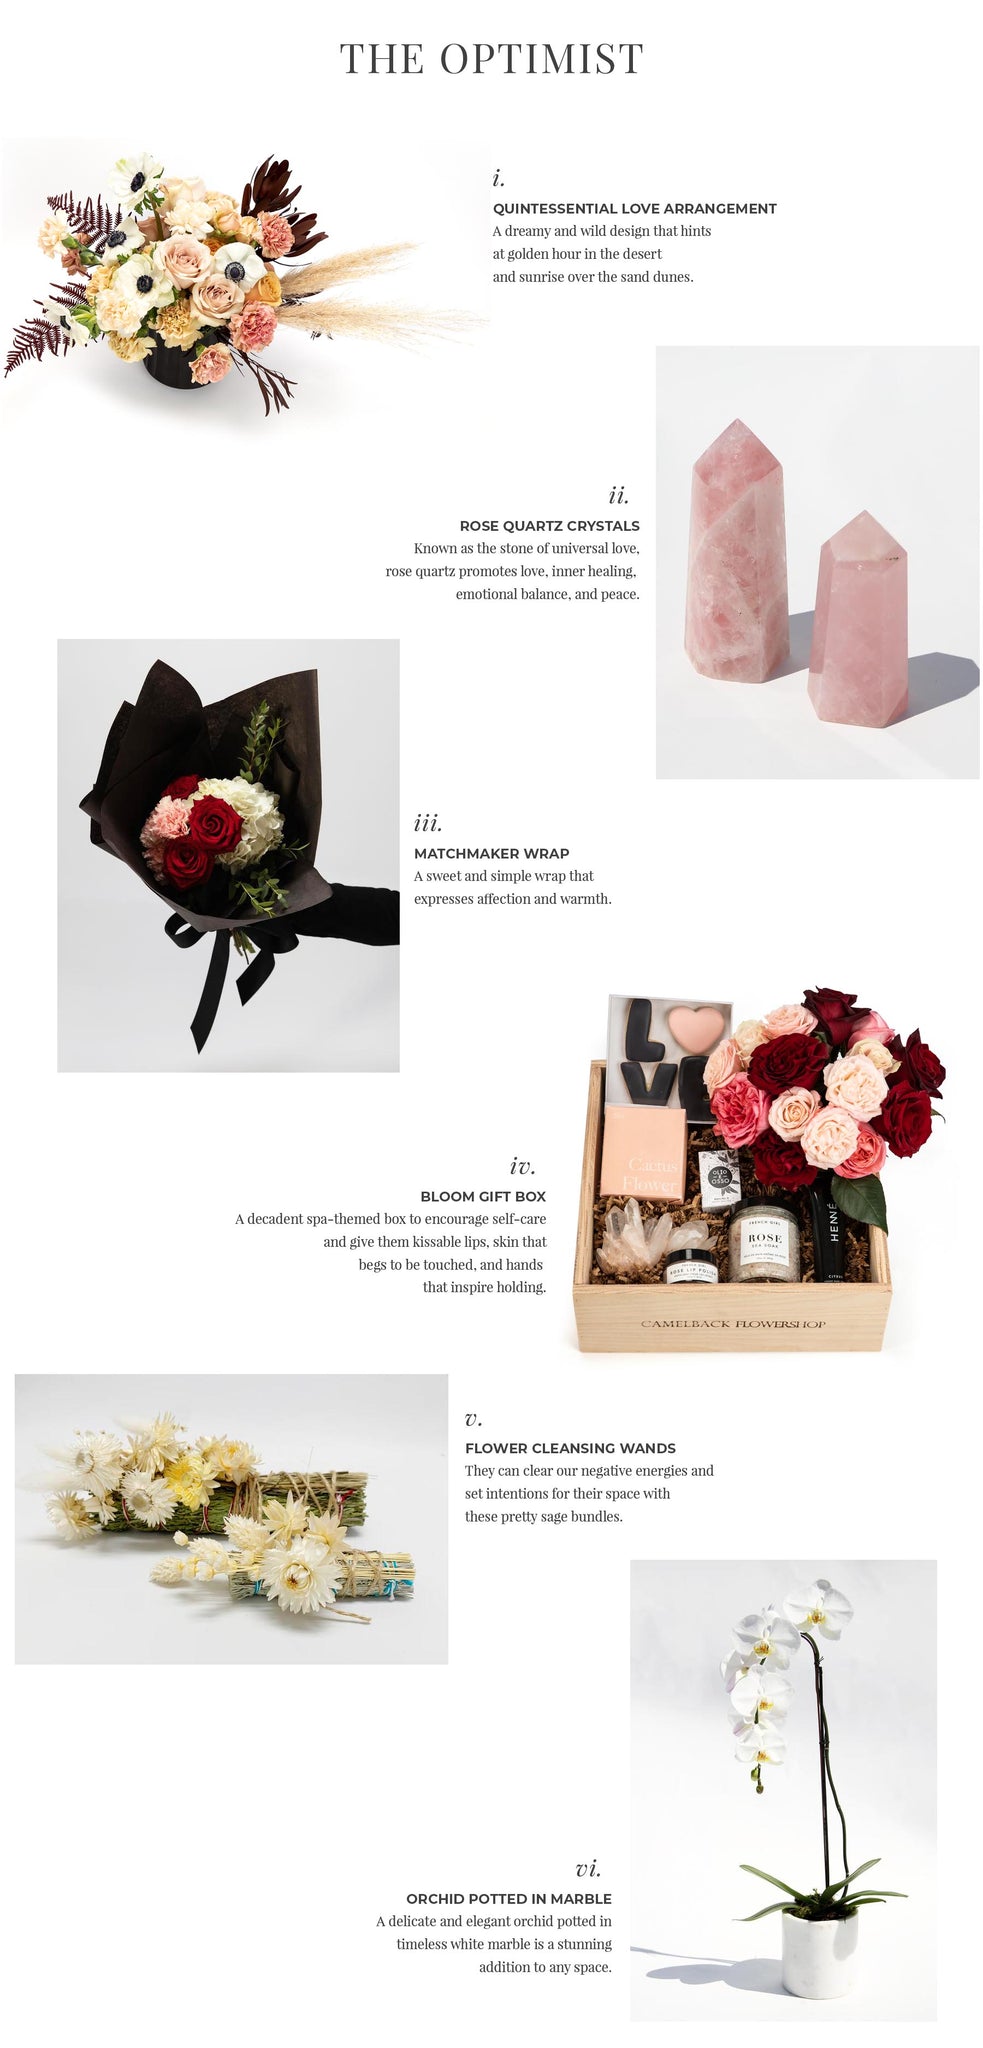 Valentine's Day Gifts Phoenix Florist Camelback Flowershop Gift Guide: The Optimist